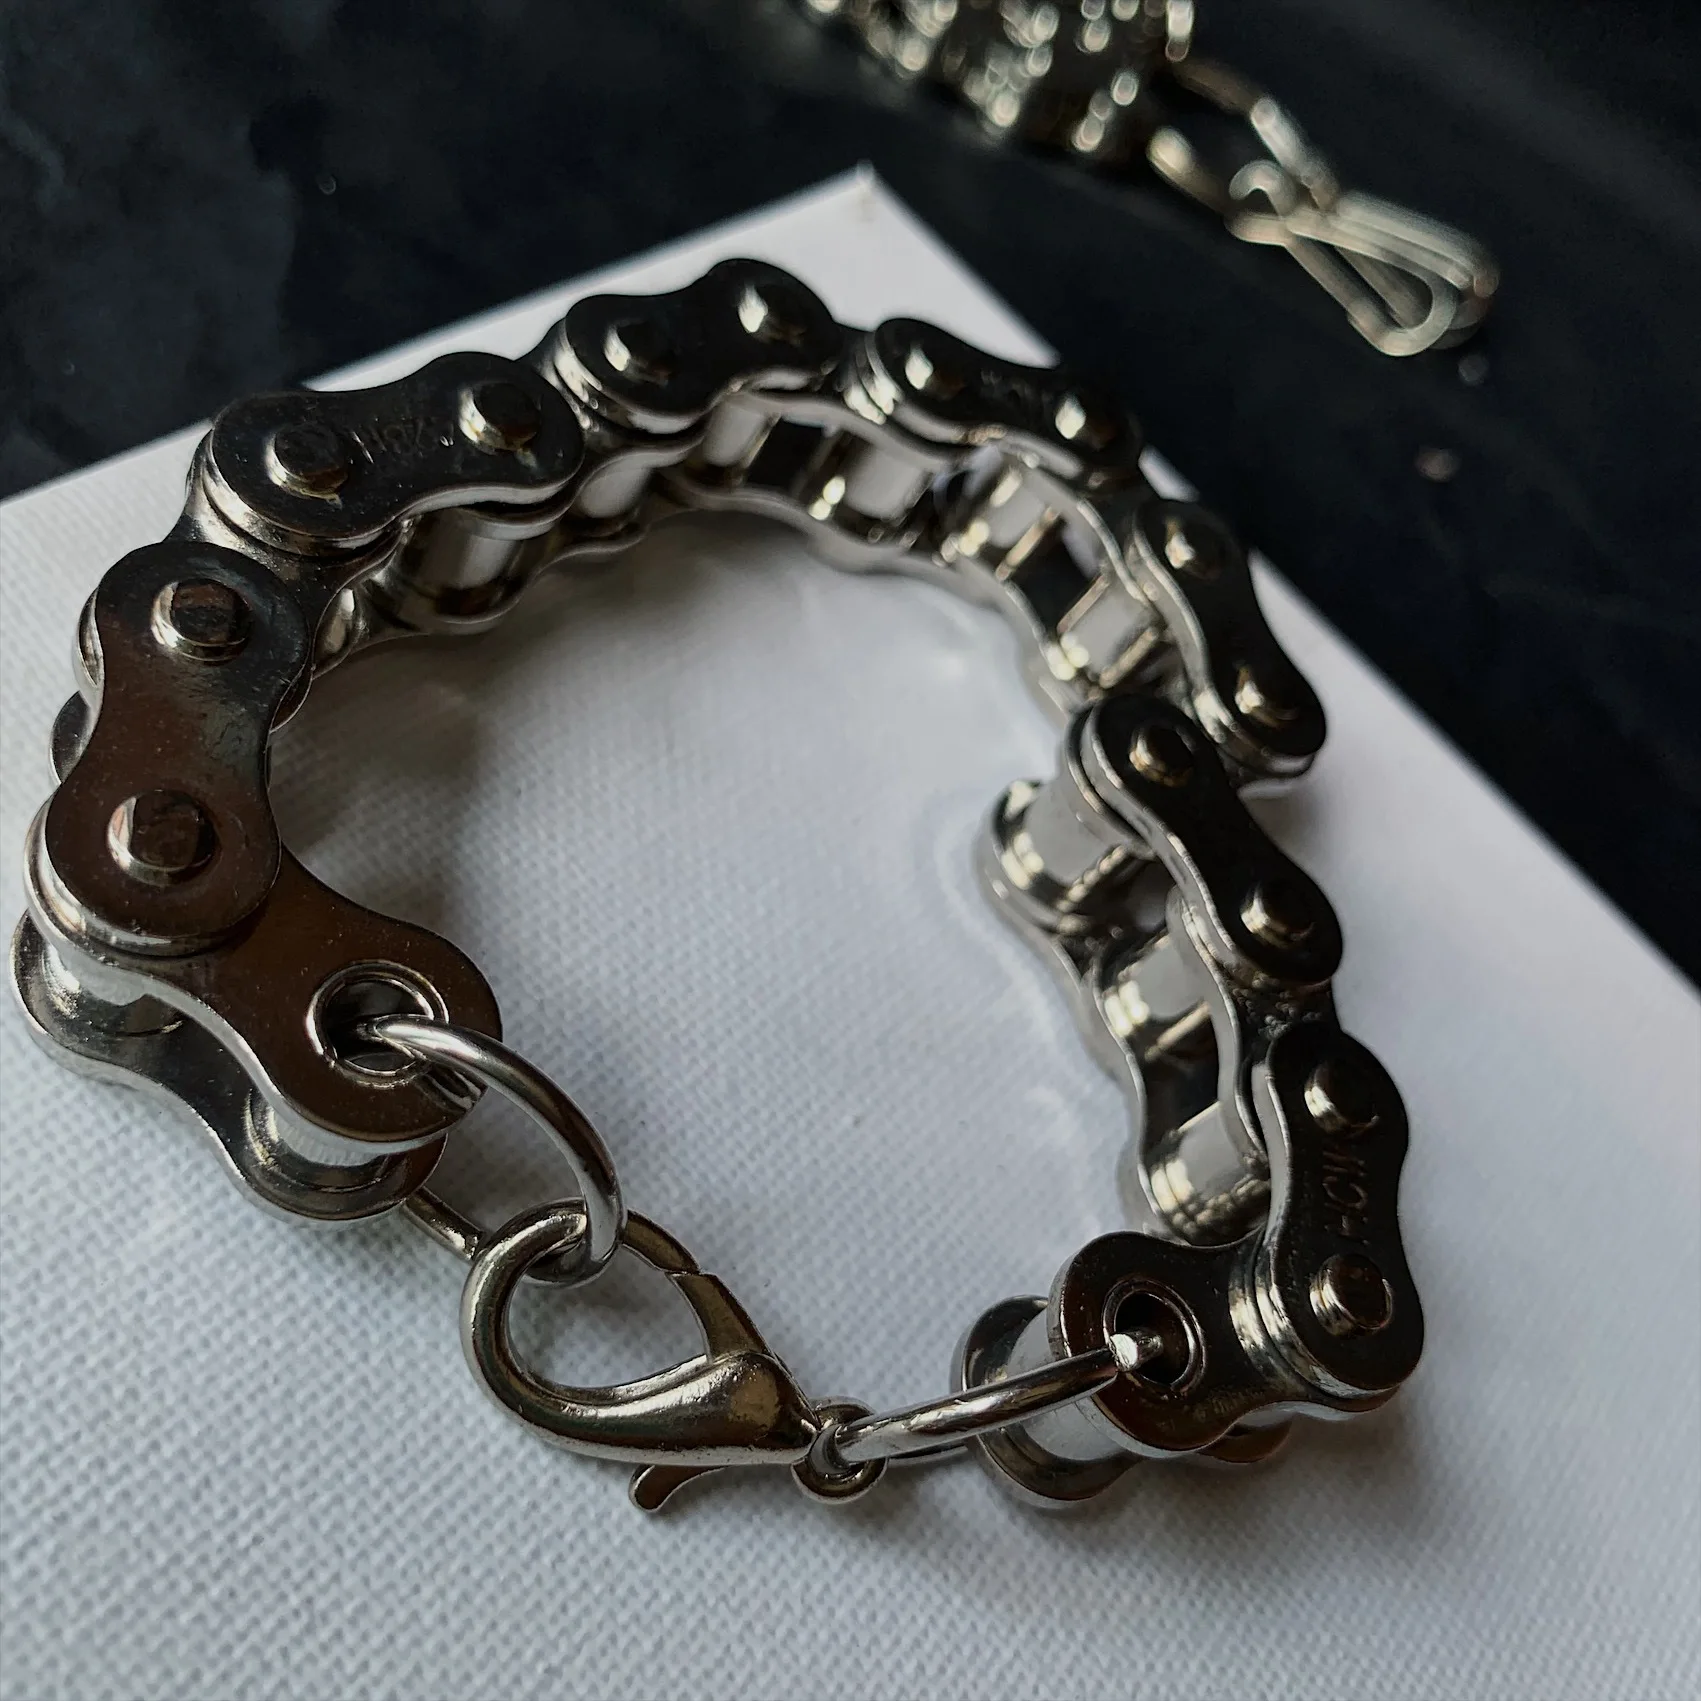 

2020 Punk Rock Male Bracelet Biker Bicycle Cuff Bracelets For Men Motorcycle Link Chain Cool Bangles Jewelry